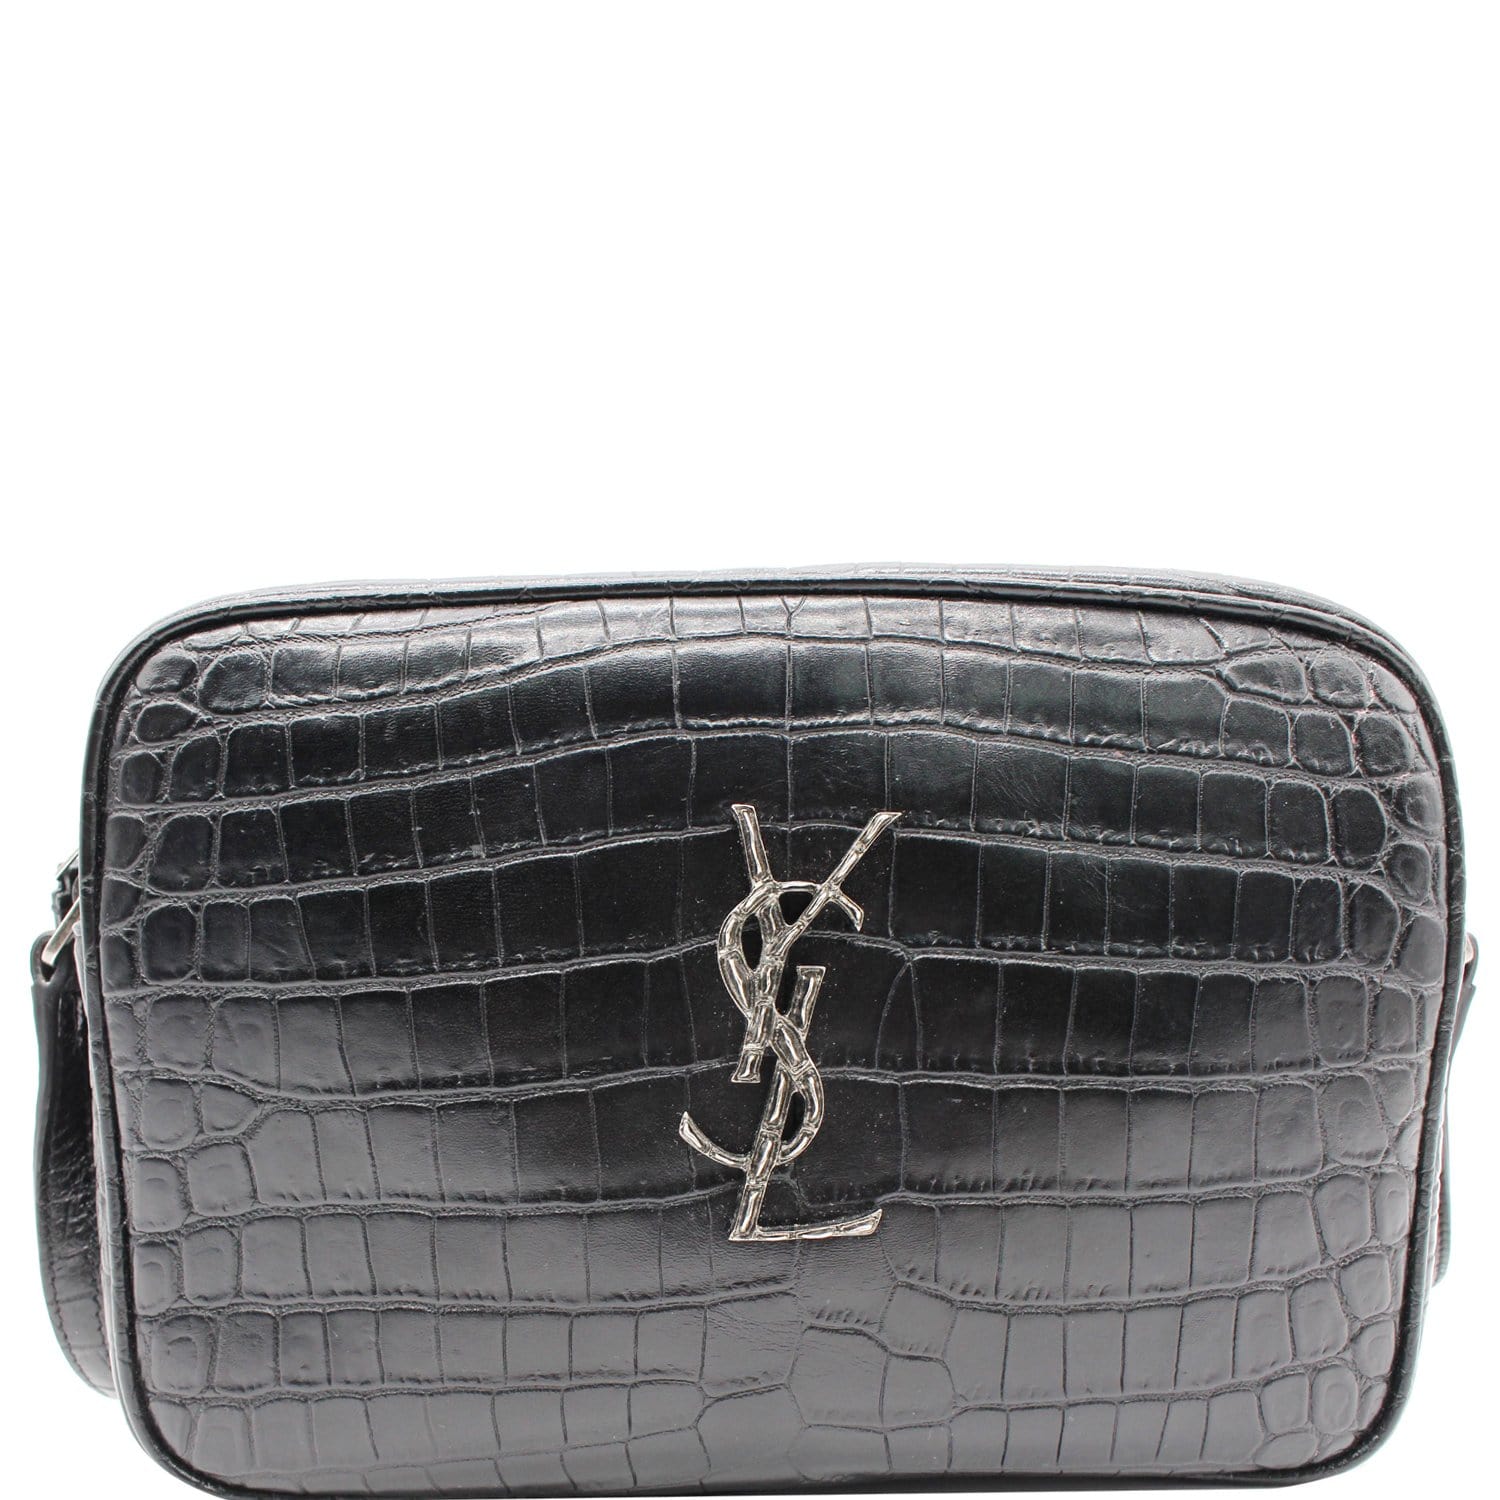 Lou mini bag in crocodile-embossed patent leather